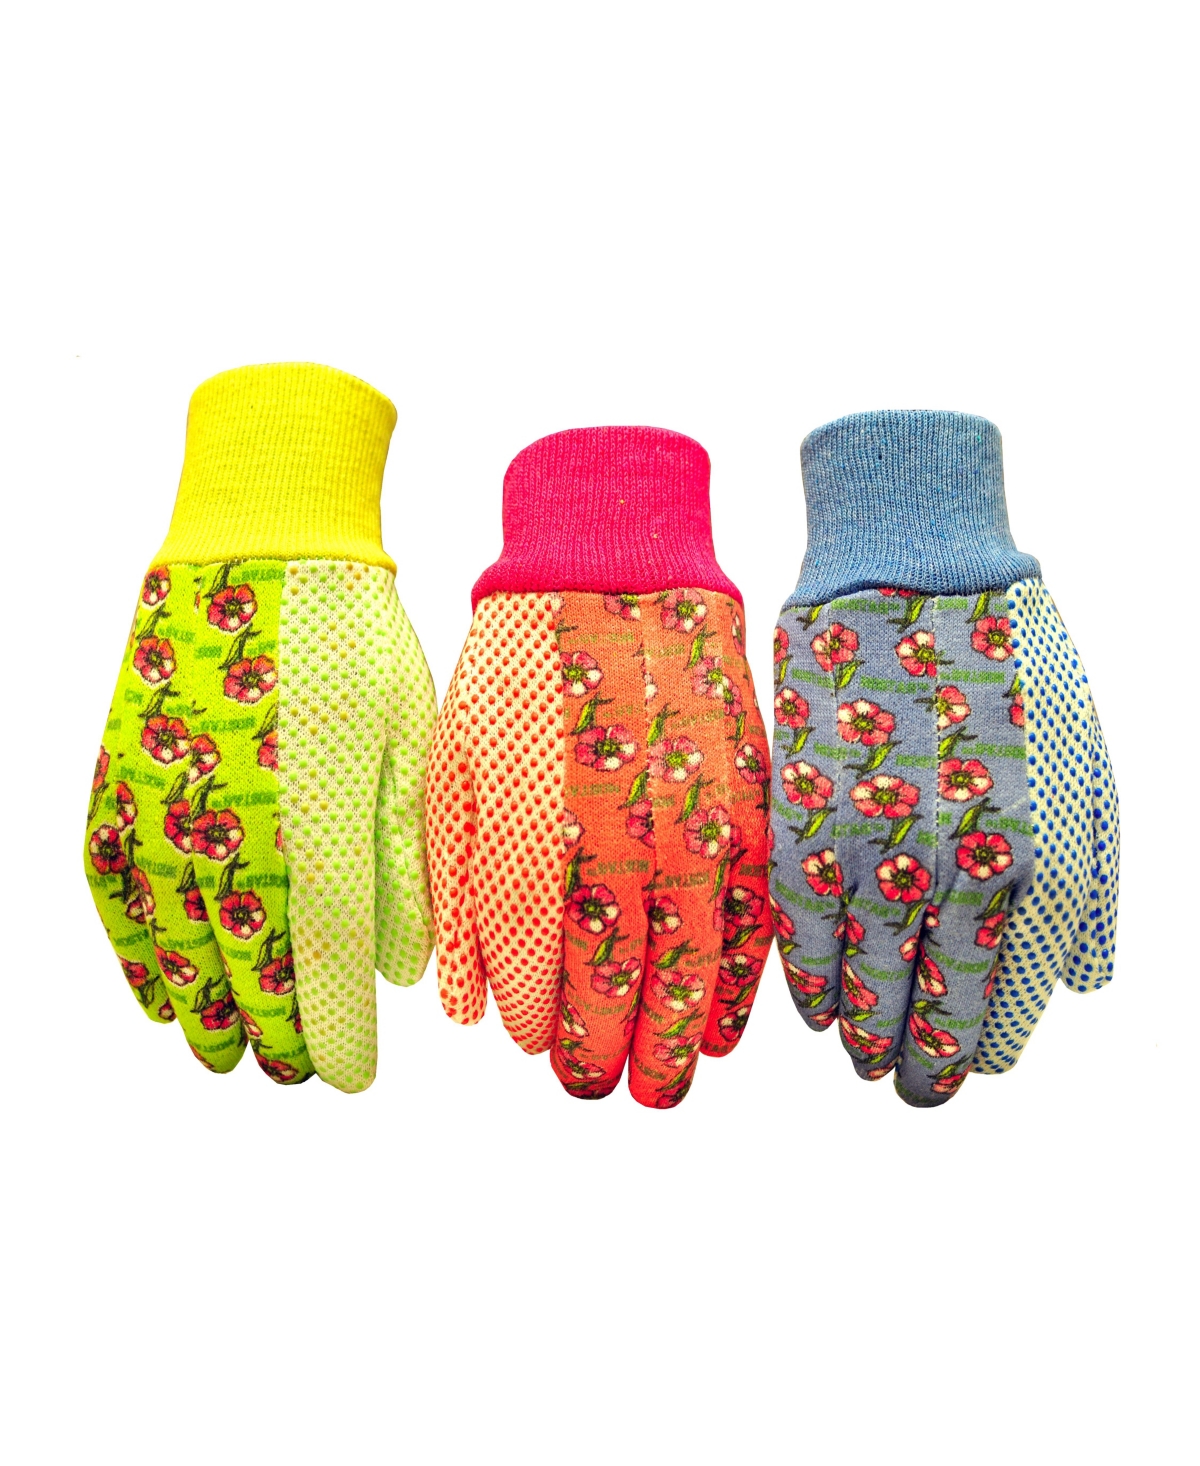 Women Soft Jersey Garden Gloves, 3 Pairs - Assorted Pre-Packed